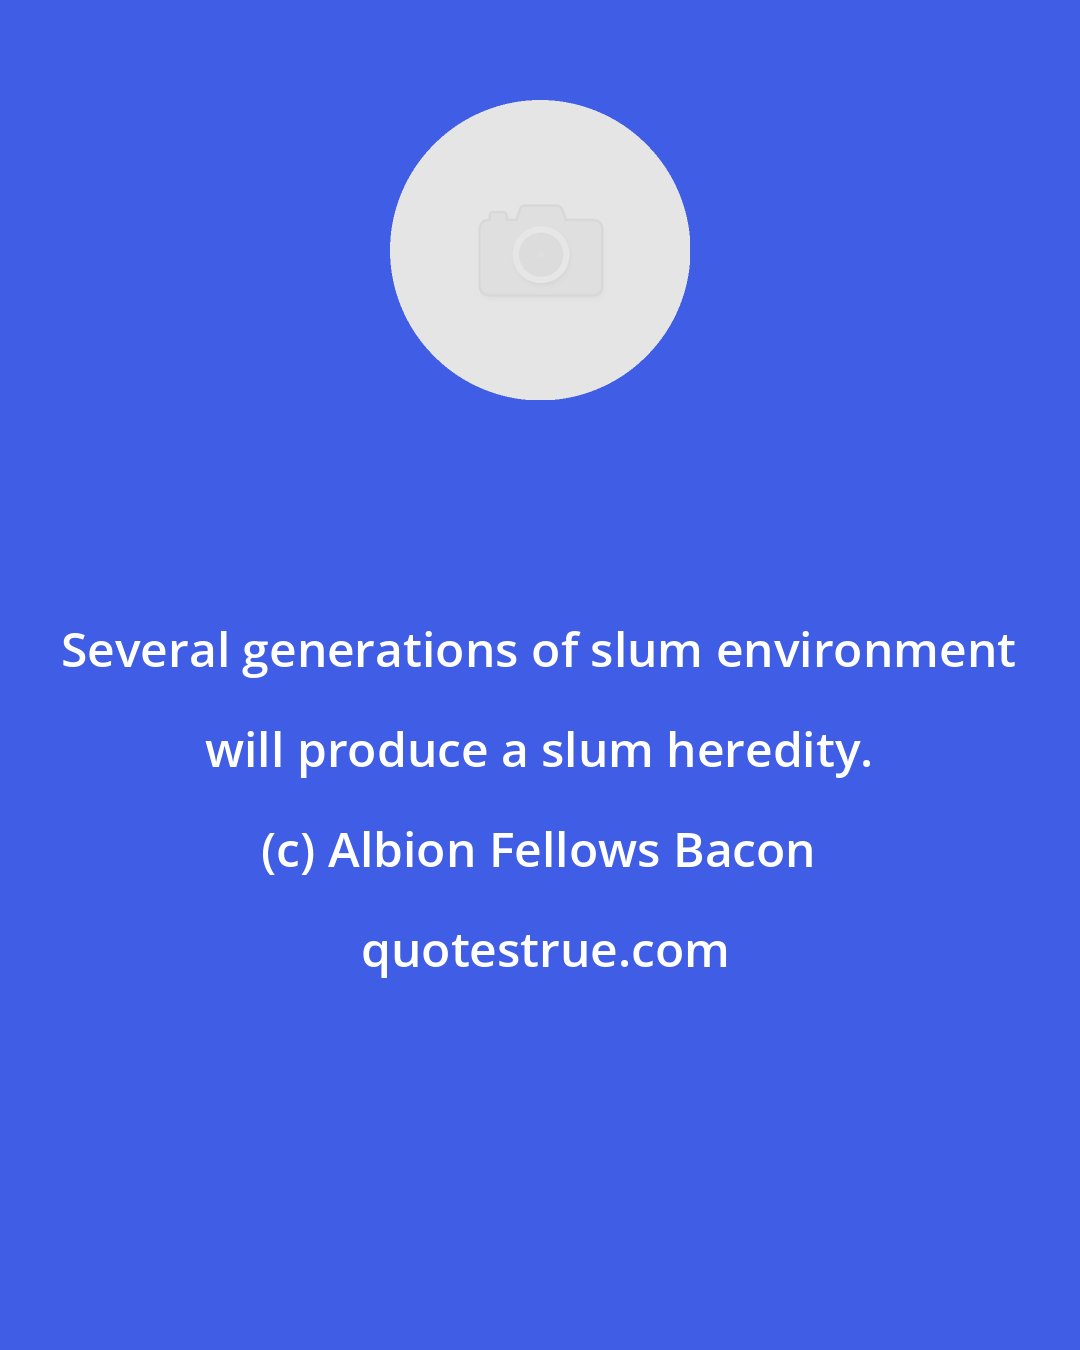 Albion Fellows Bacon: Several generations of slum environment will produce a slum heredity.